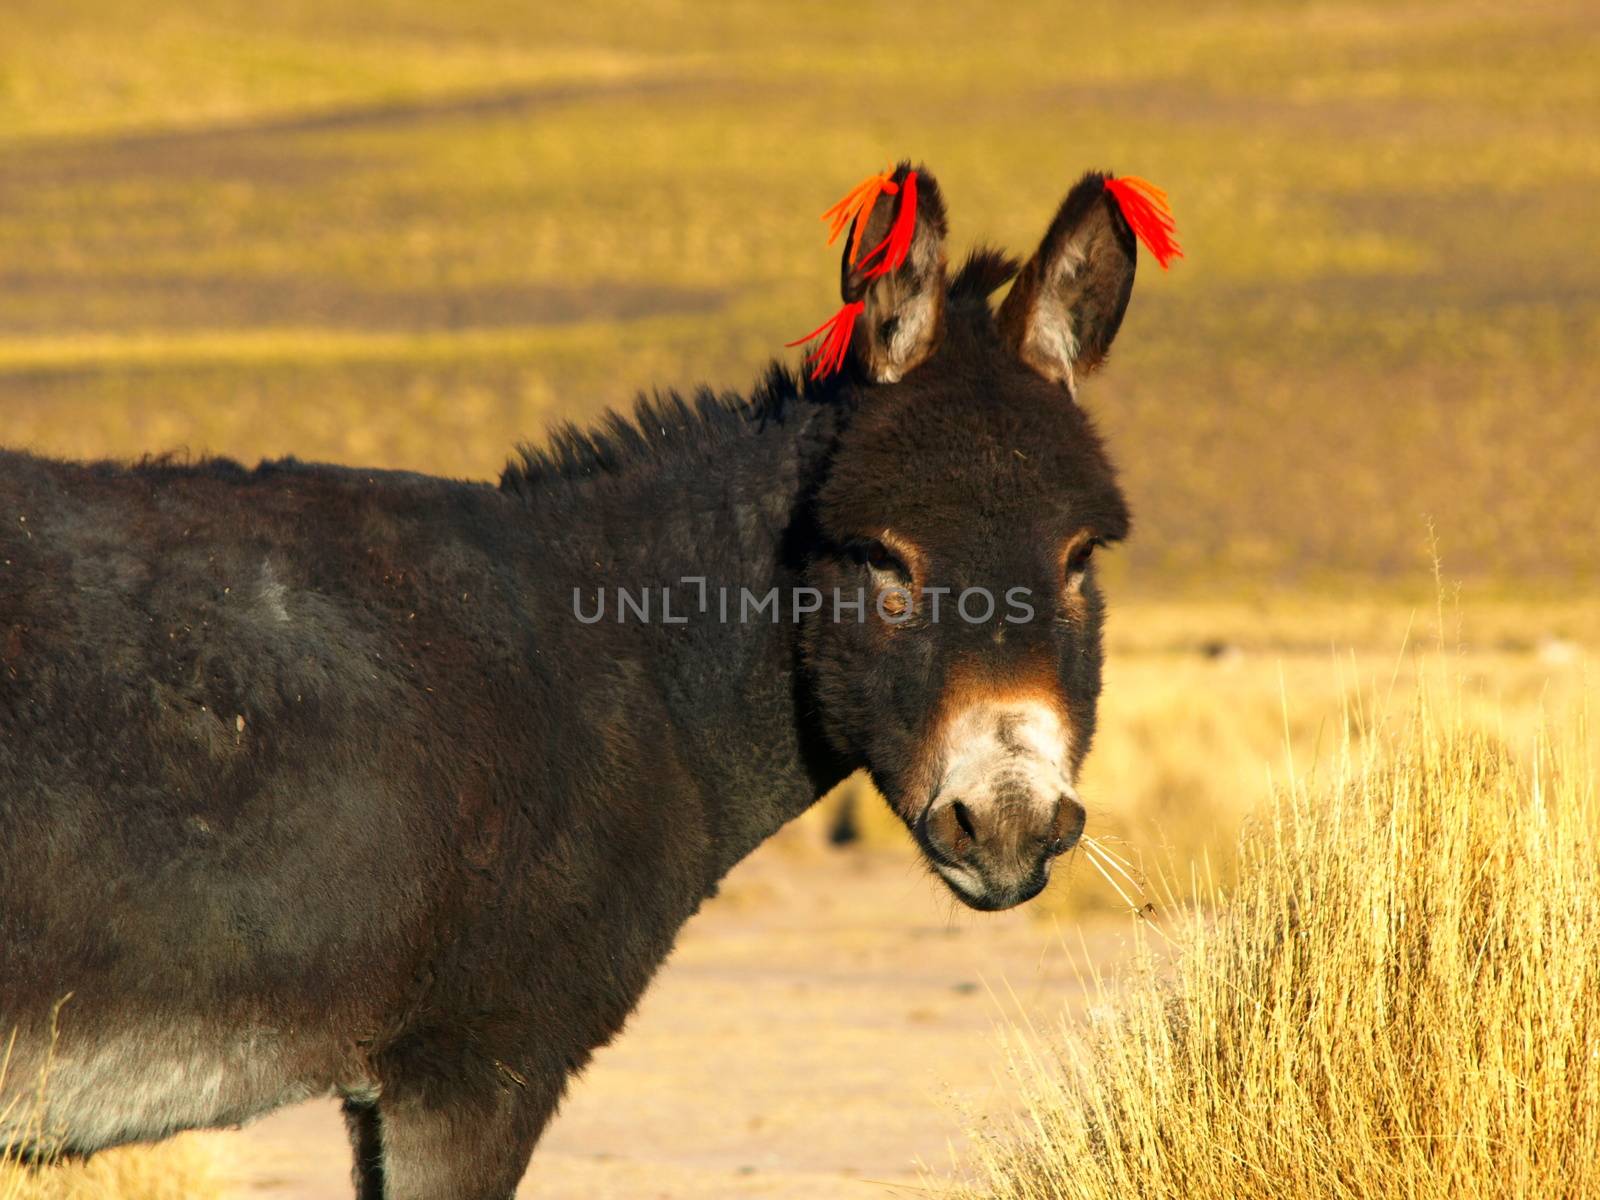 Cute donkey of altiplano